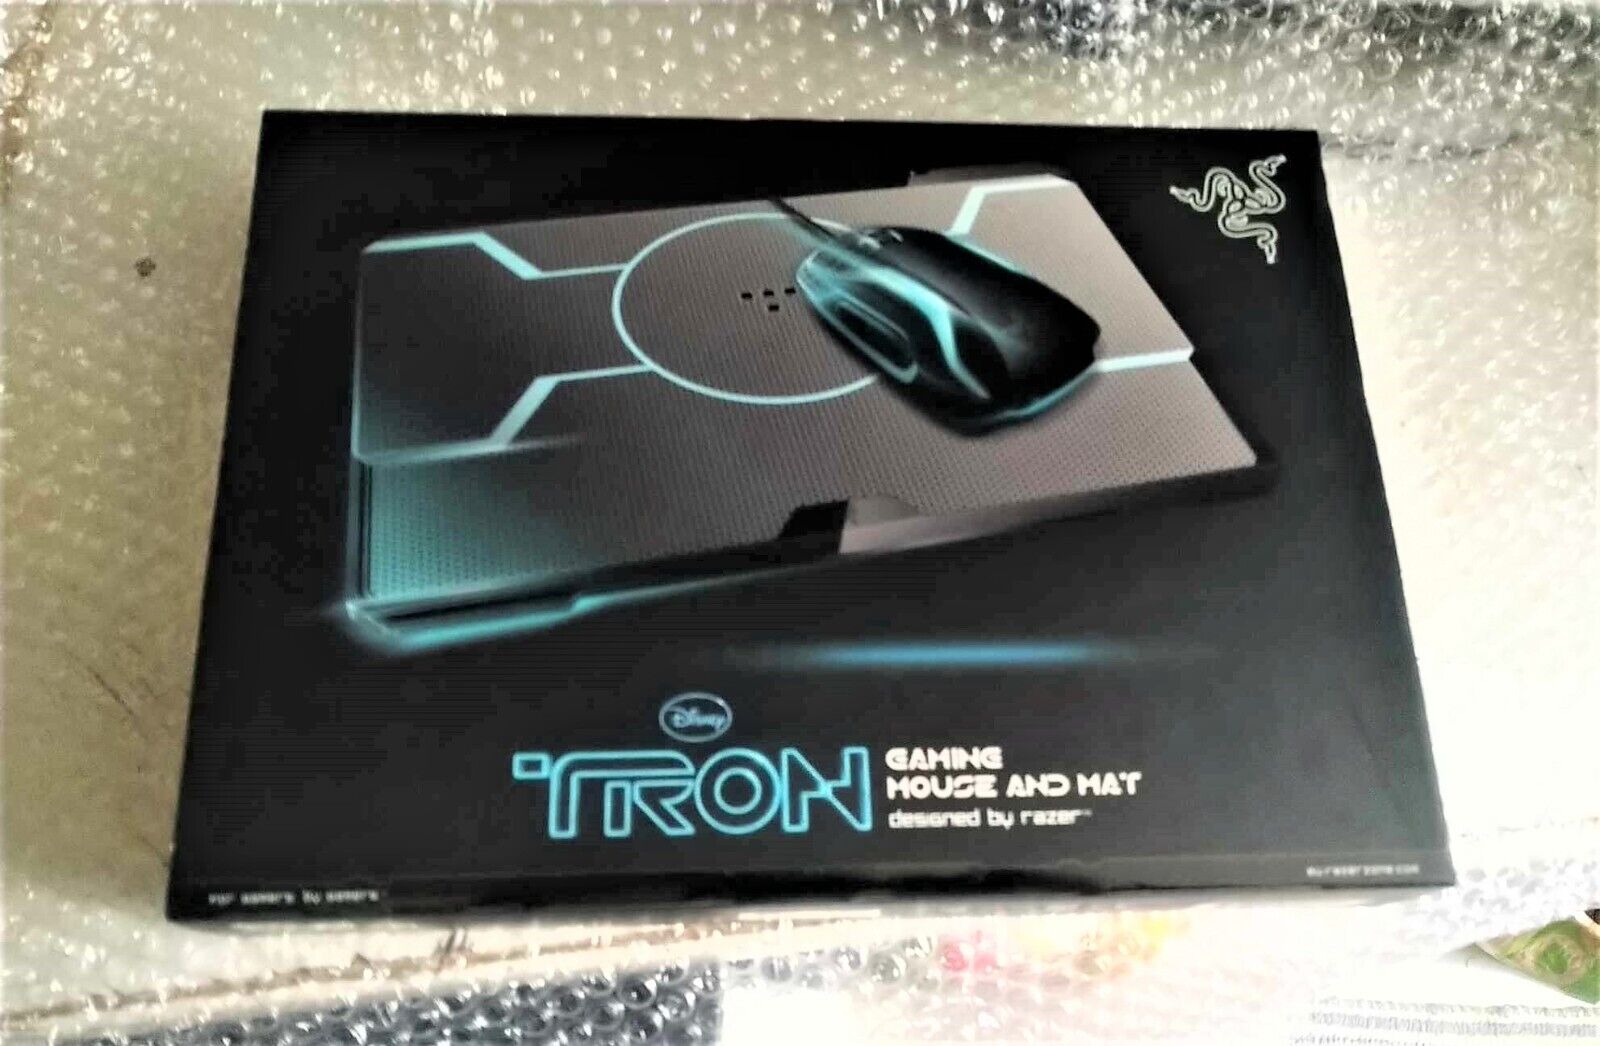 Ultra Rare Collector Ambidextrous Disney Razer Tron Legacy Mouse + Mat New